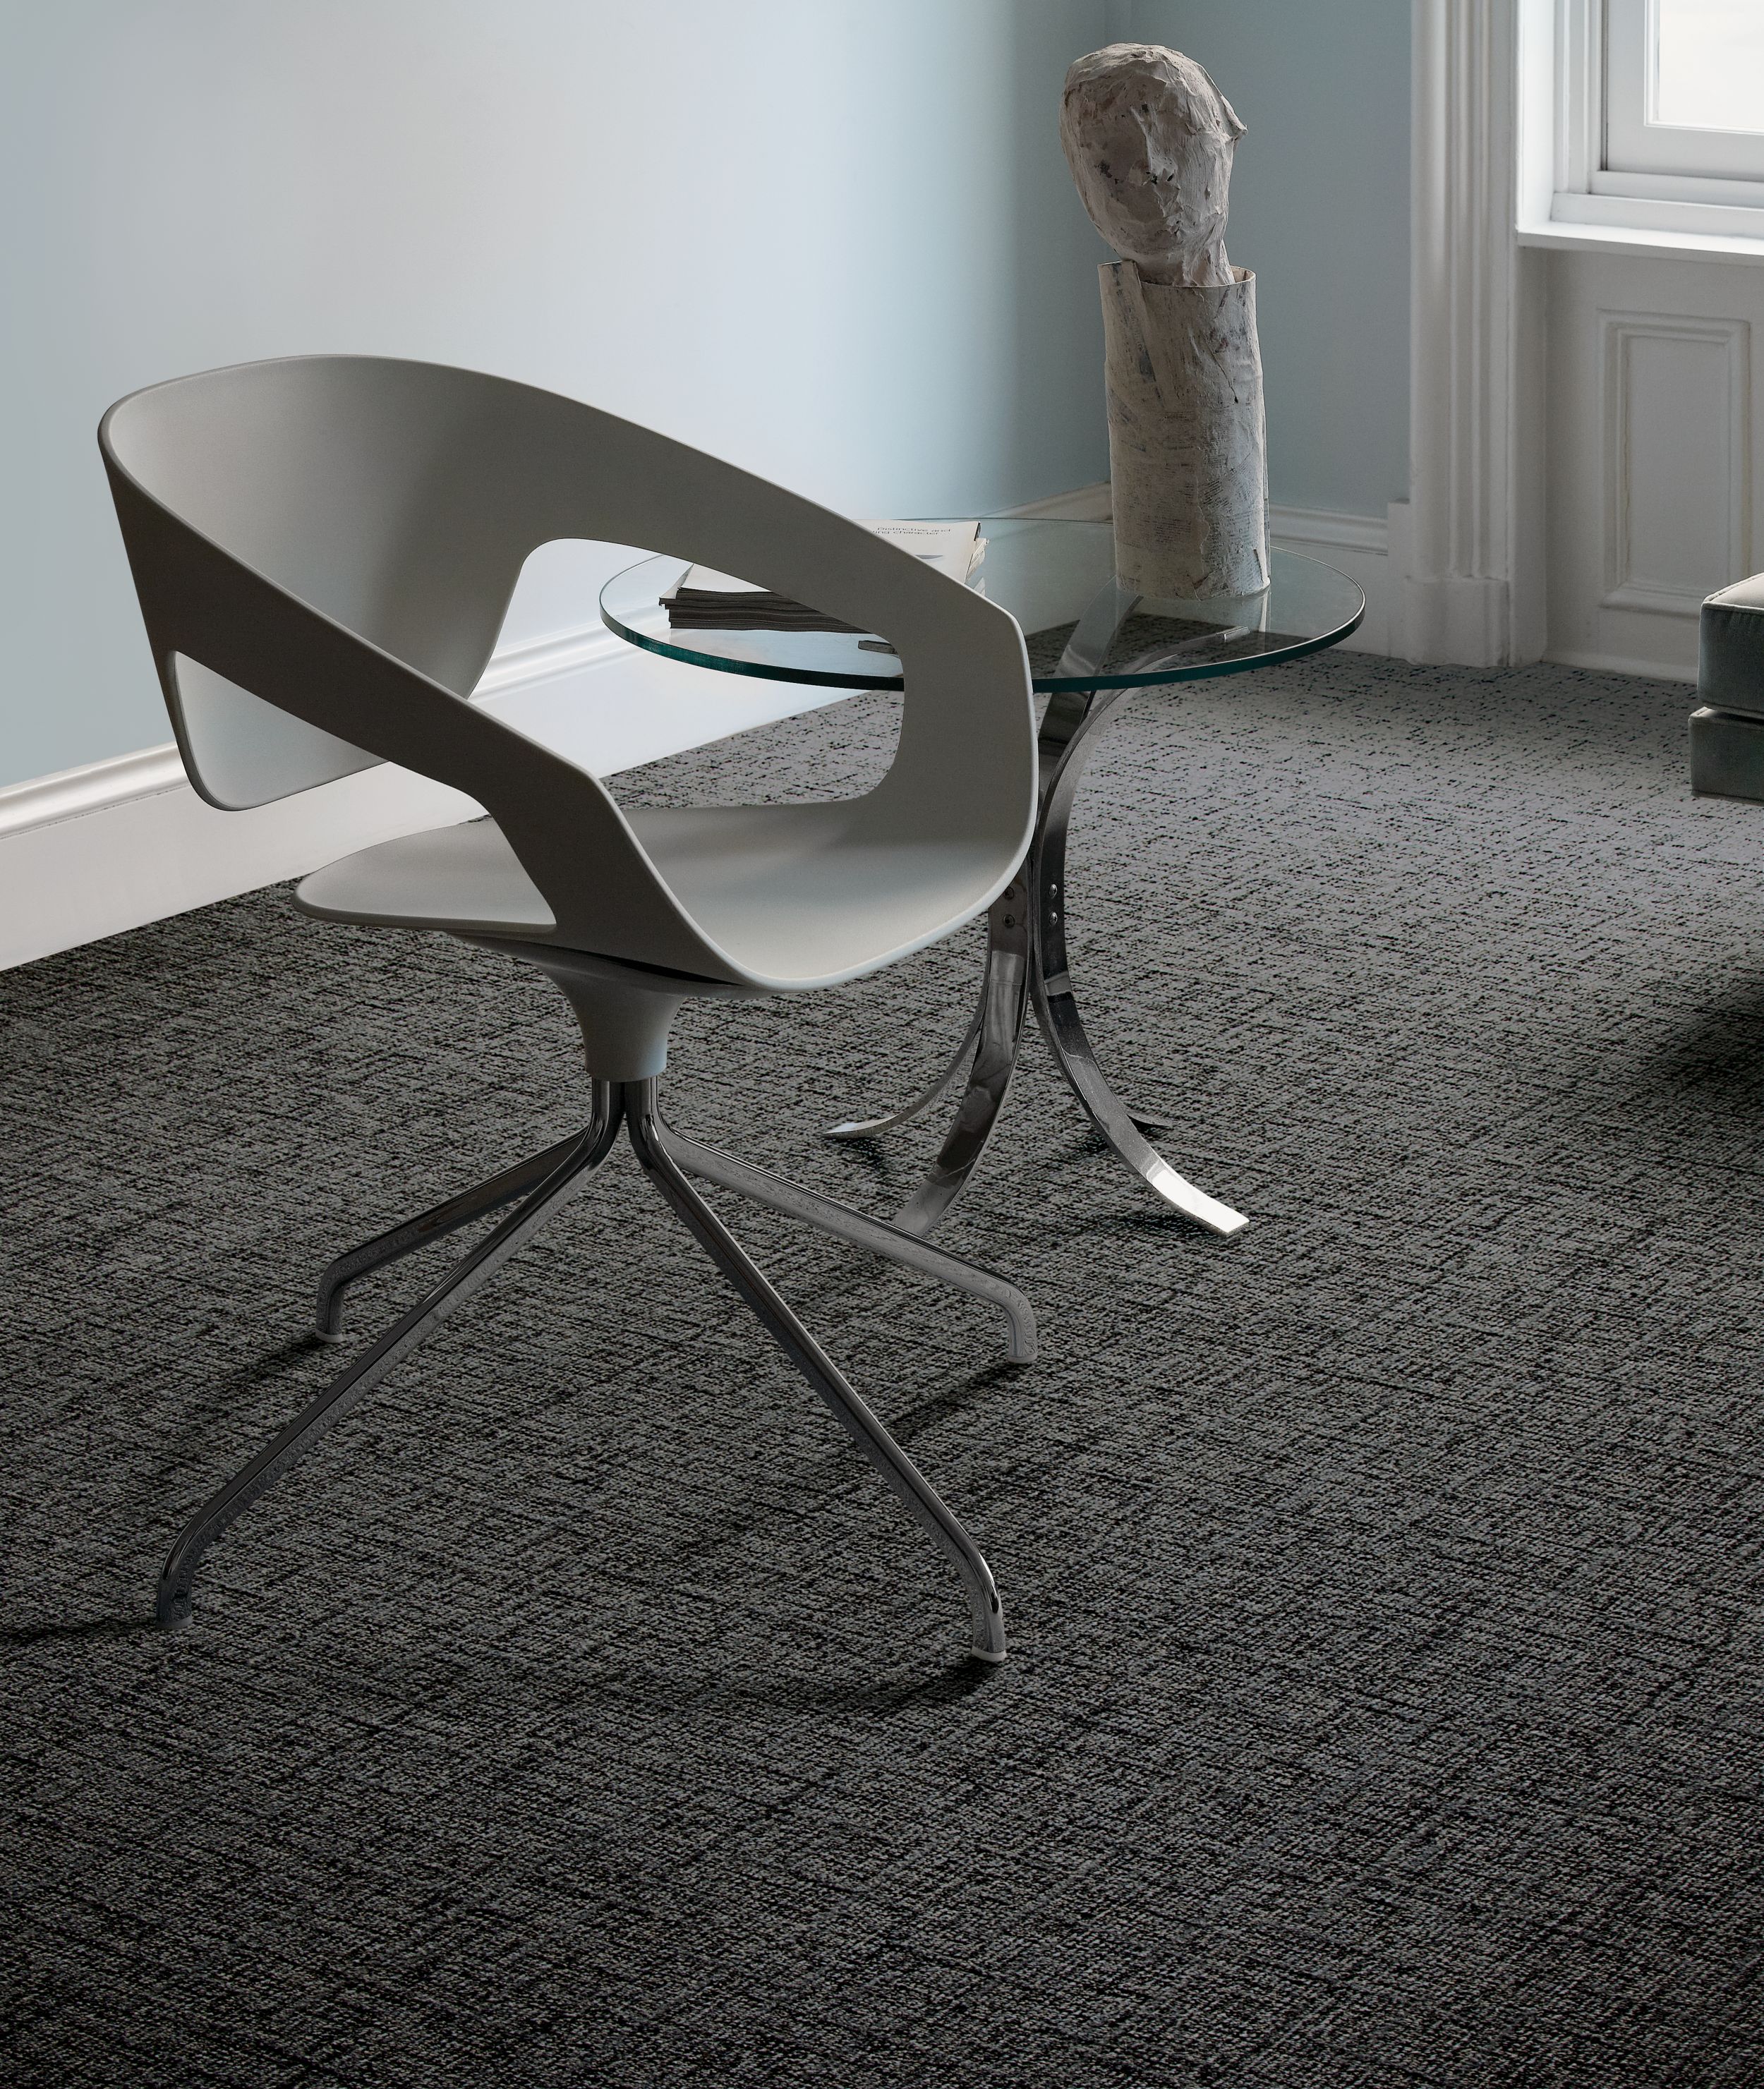 Interface UR303 carpet tile in seating area  imagen número 1